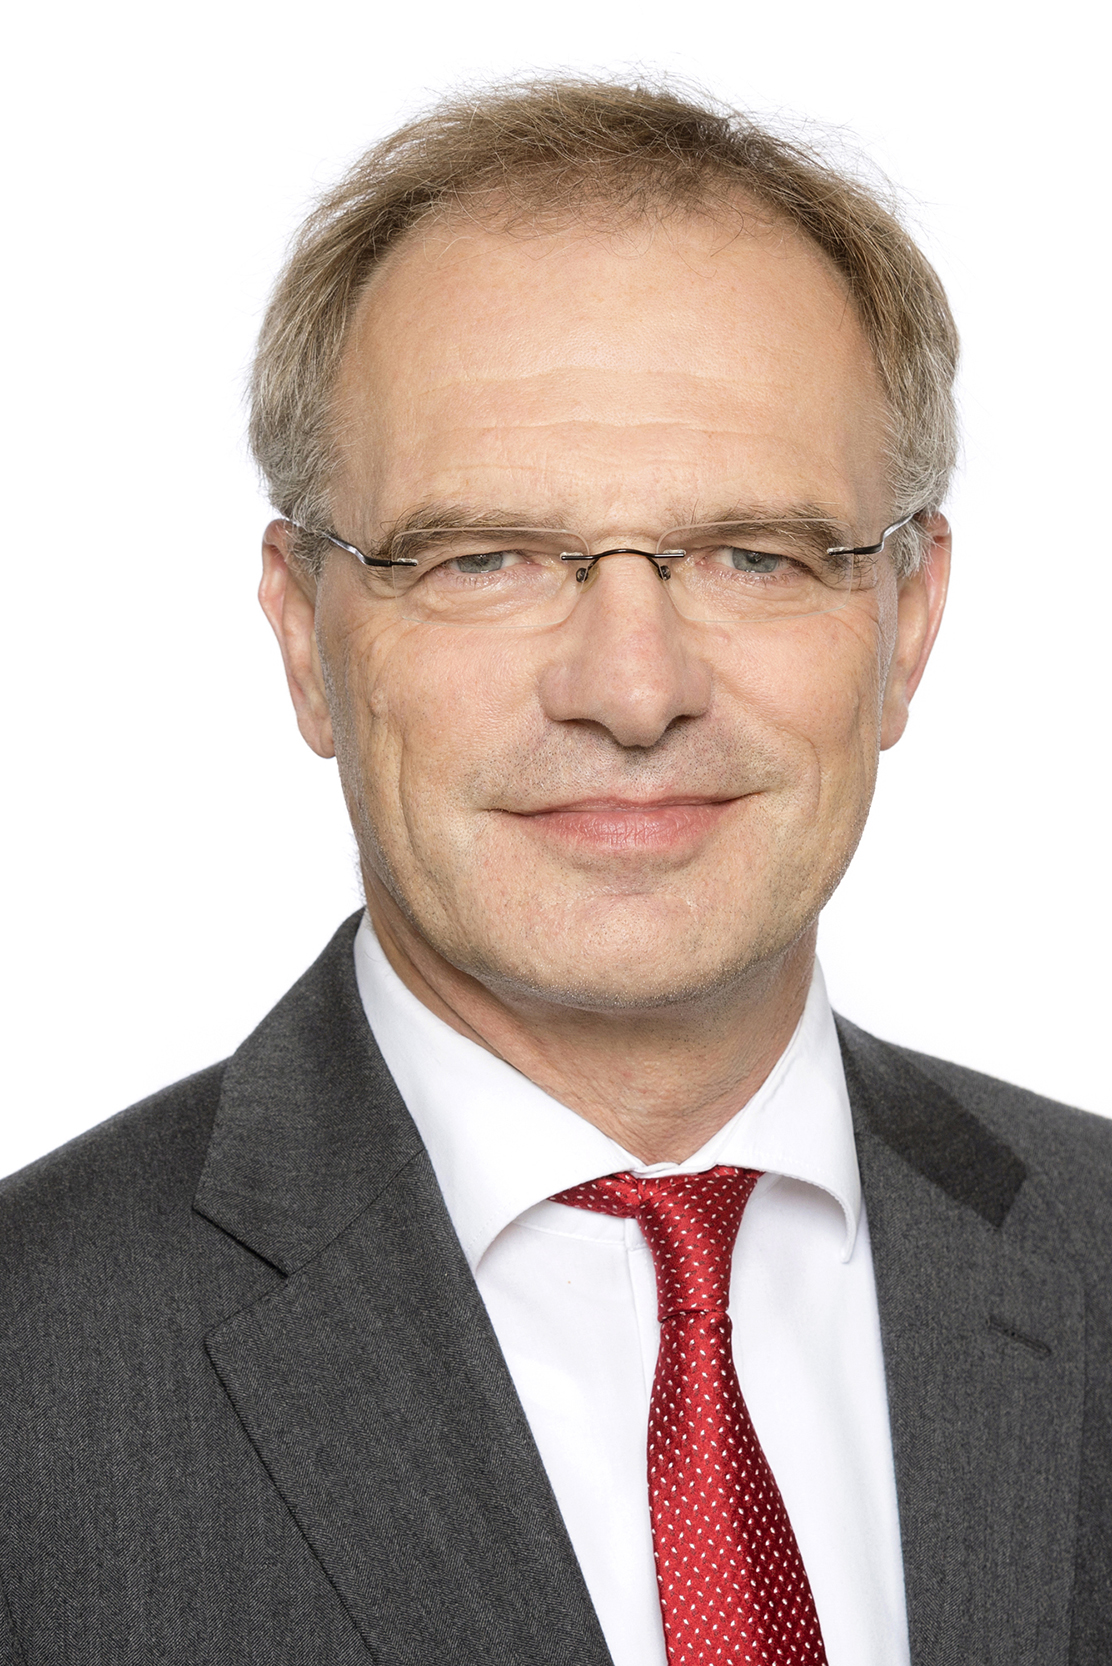 Stefan Raue, directeur de Deutschlandradio. © Deutschlandradio / Bettina Fürst-Fastré